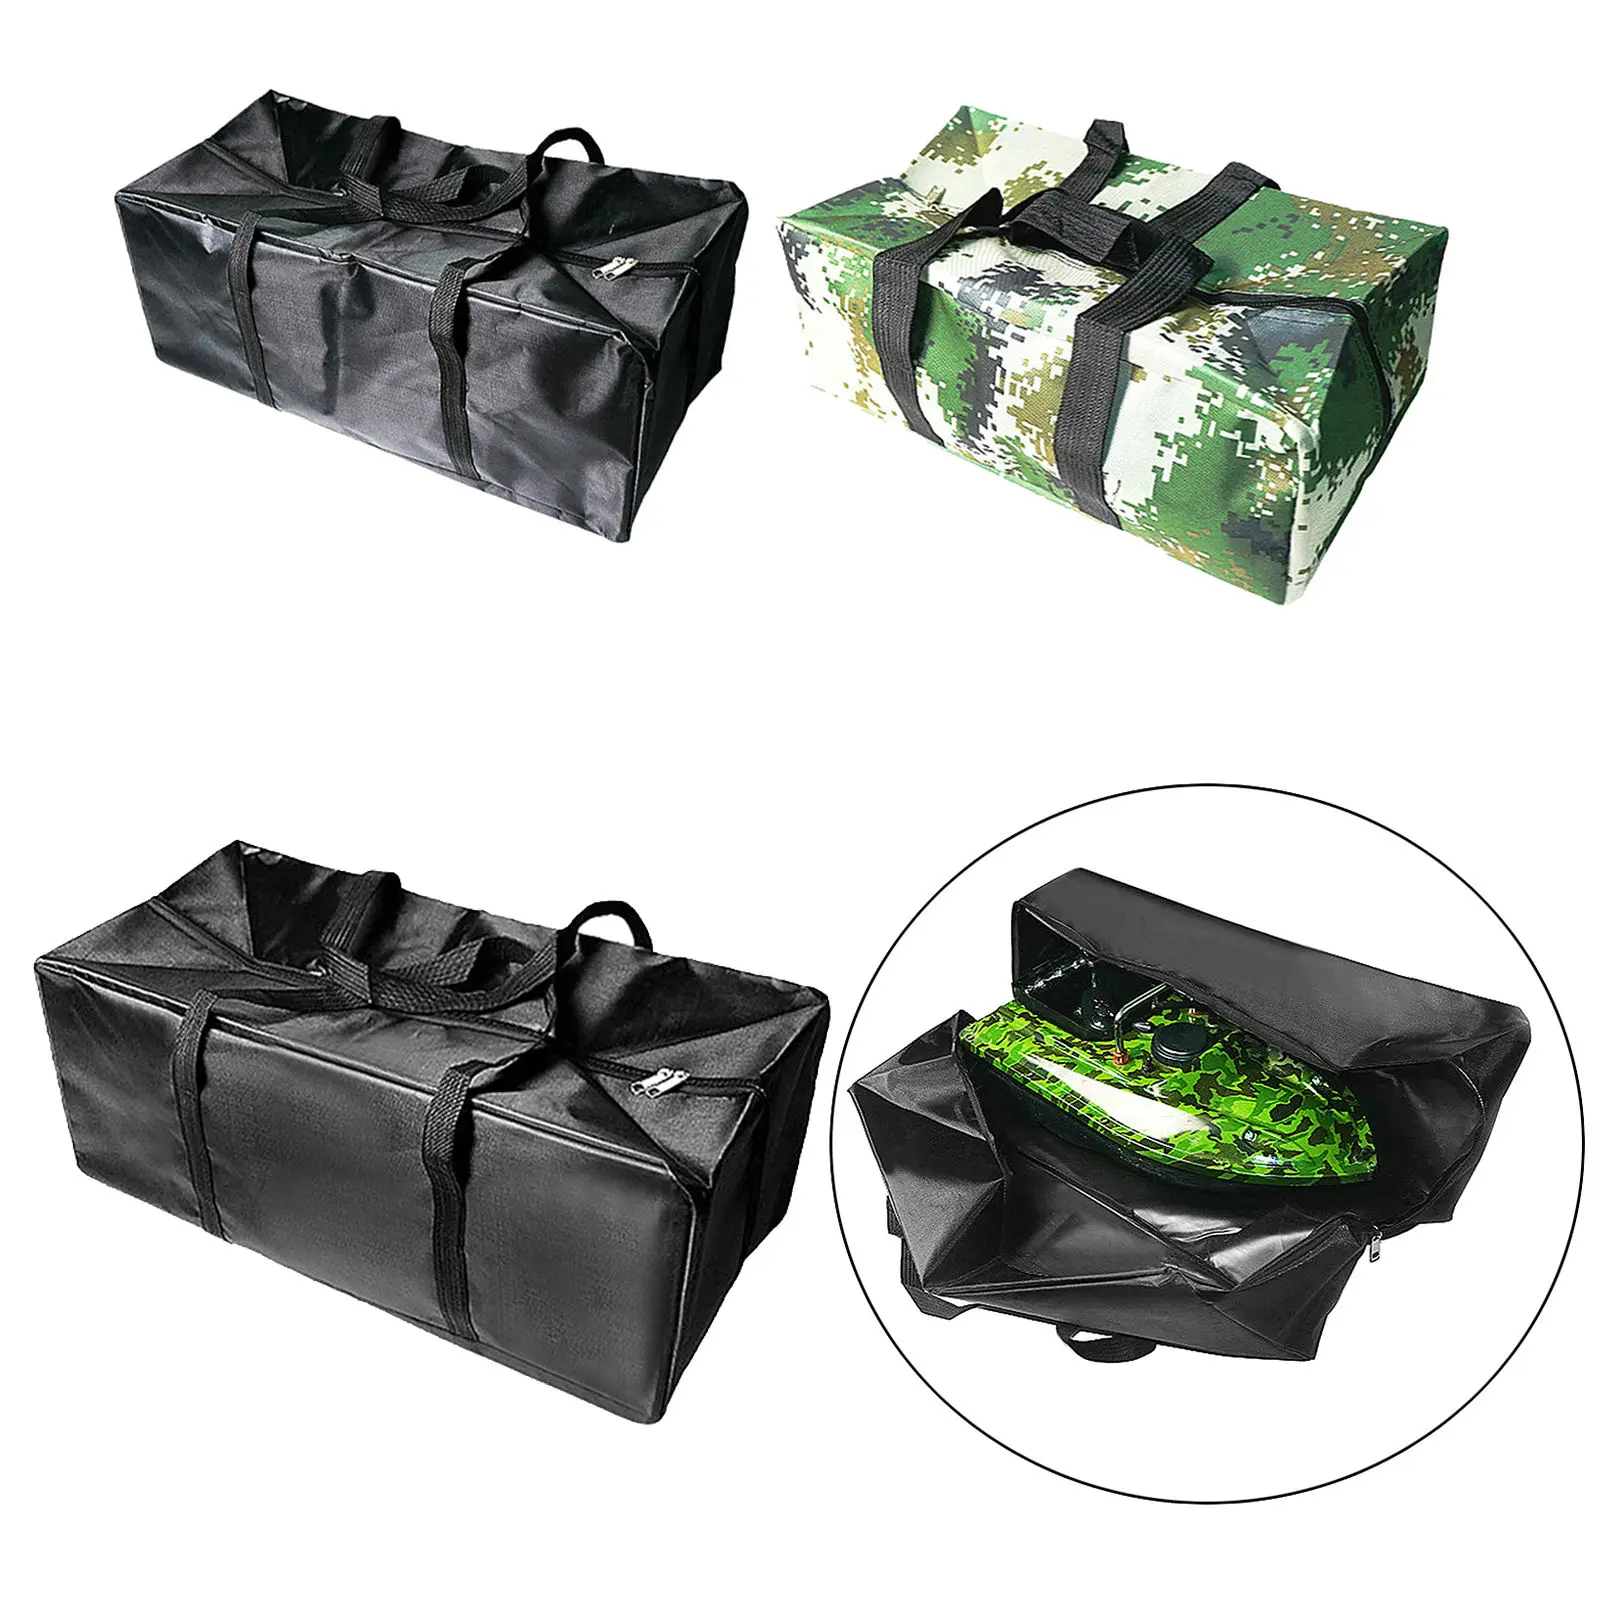 Bag for Bait Boat Duffle Durable Dividers Comfortable Resistant Straps Medium Carry Bag Storage Bag for Camping Sports Men Women